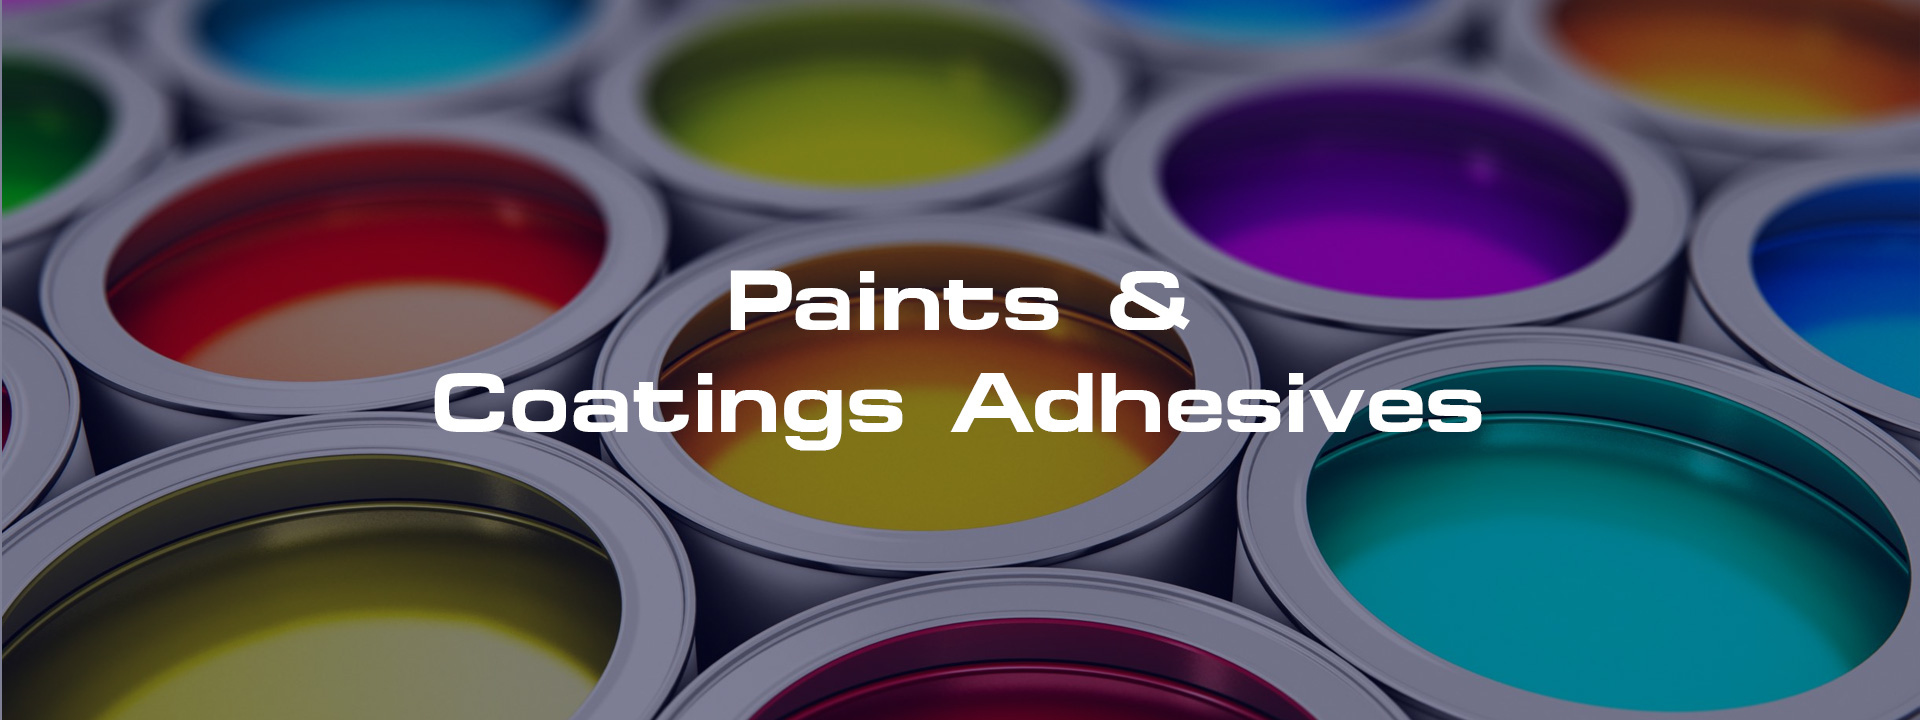 Paints-Coatings-Adhesives-hero-cover-01